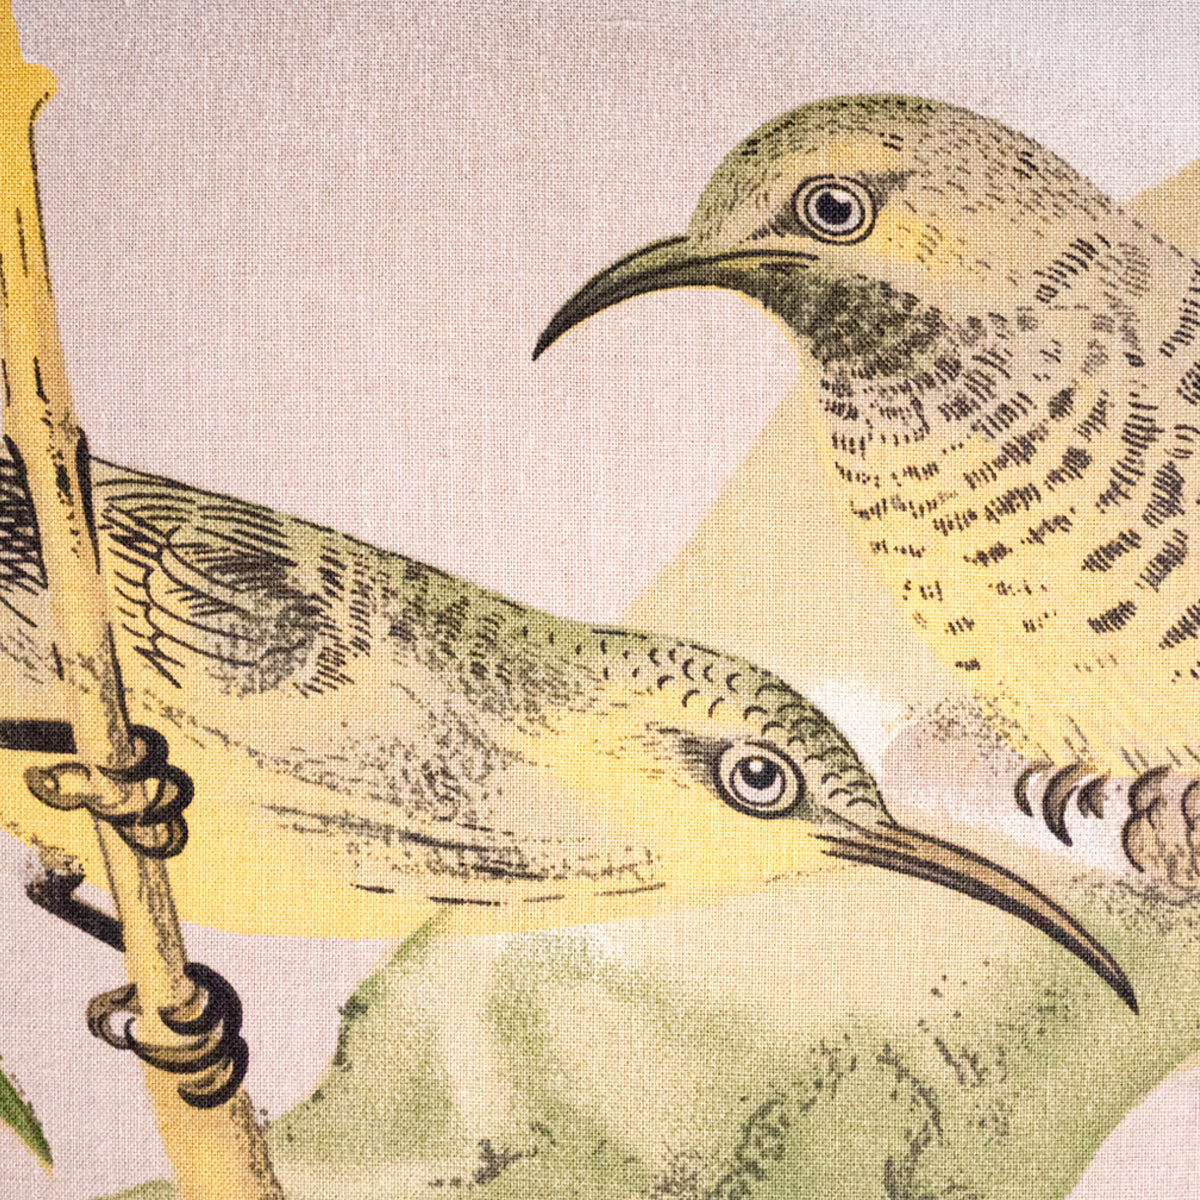 25.7×36.3cm ファブリックパネル Chinoiserie Birds